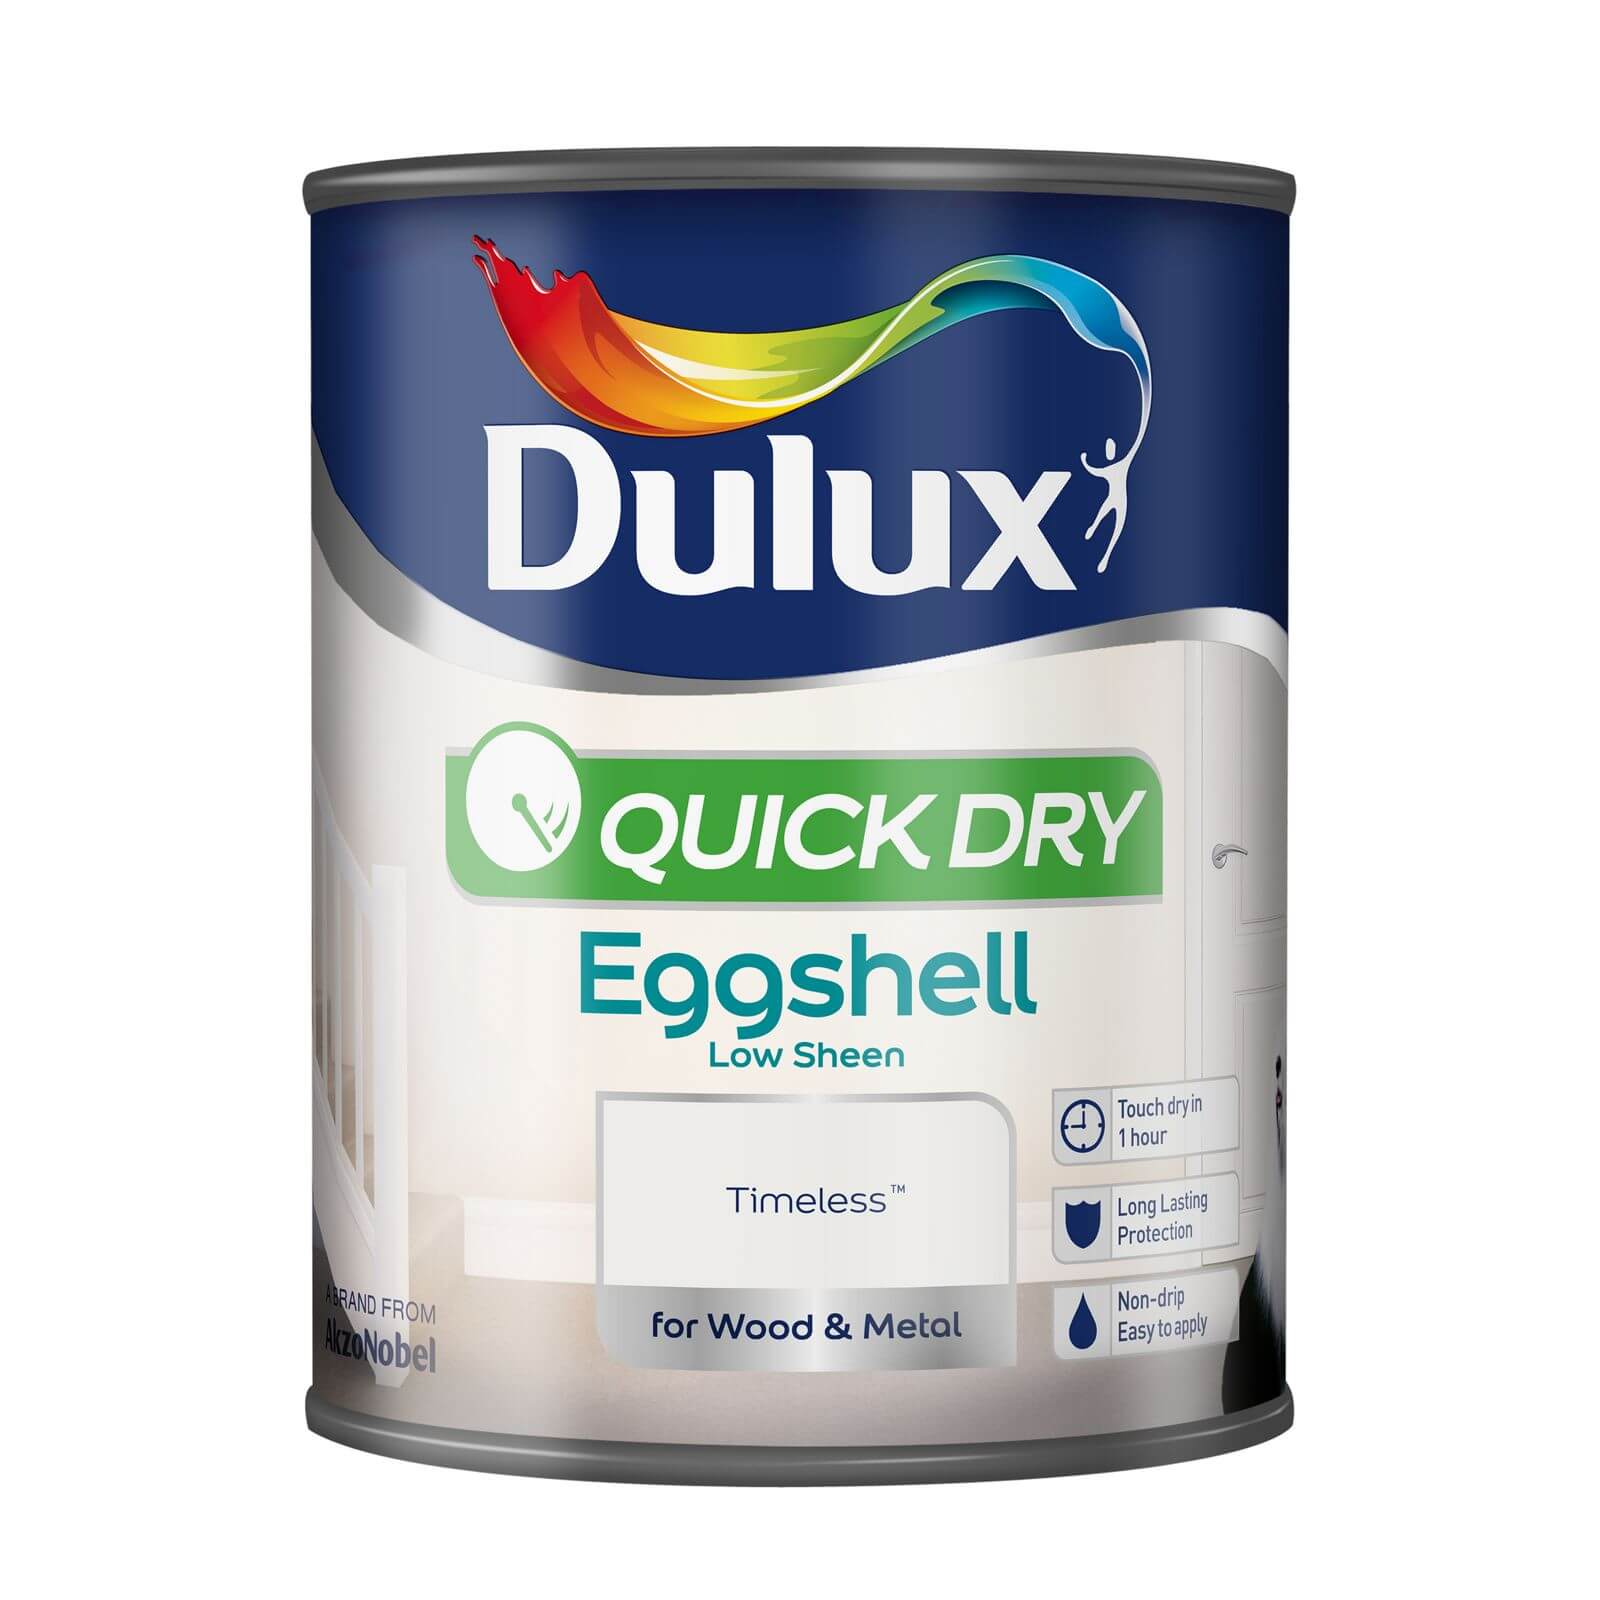 Dulux Quick Dry Eggshell Timeless - 750ml